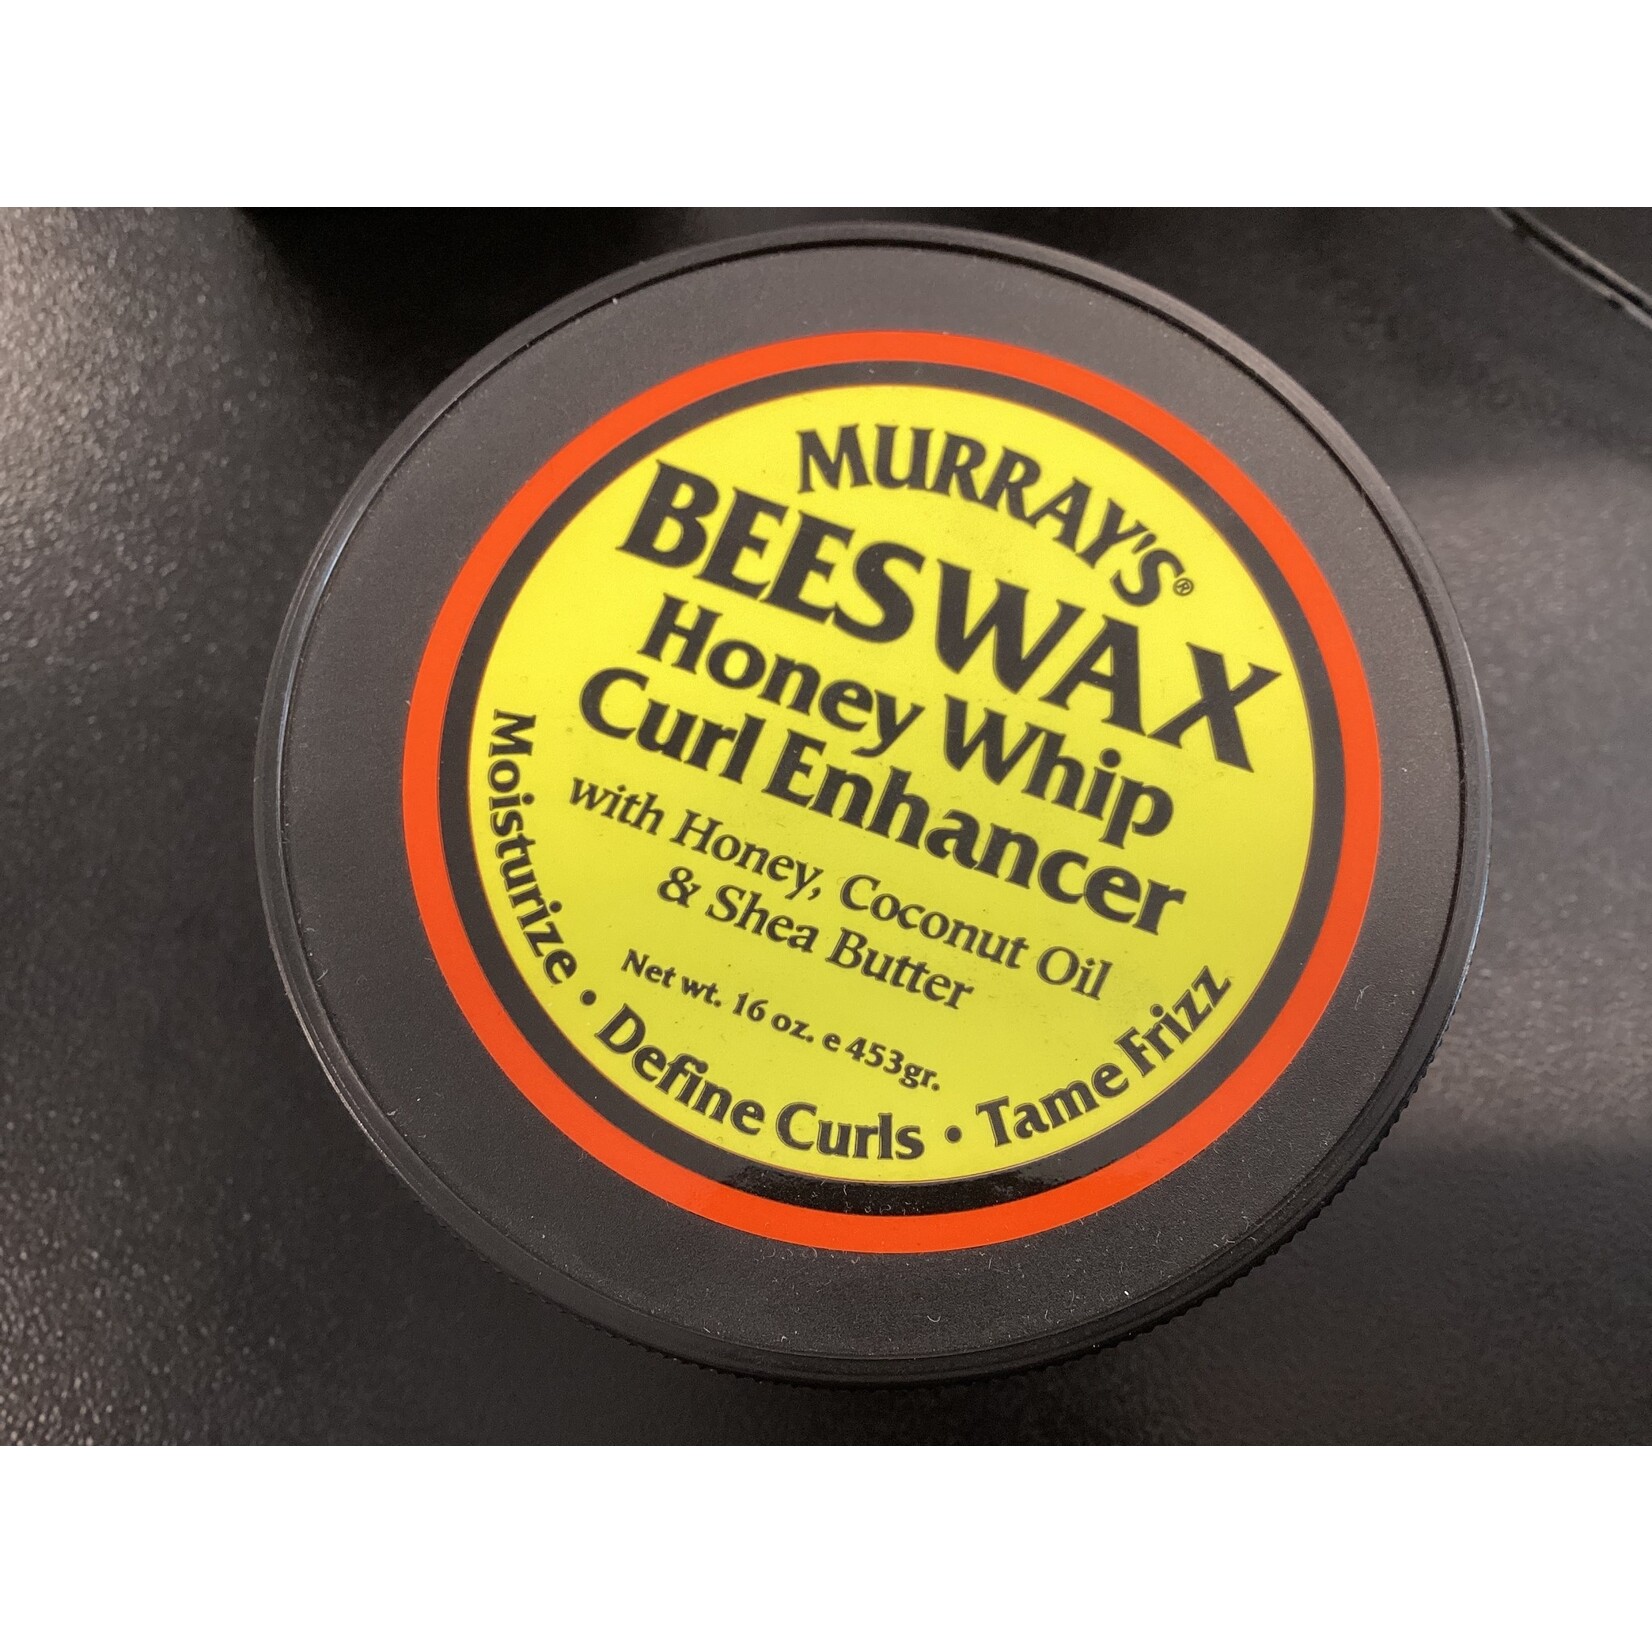  Murray's Beeswax Honey Whip Enhancer 16 oz